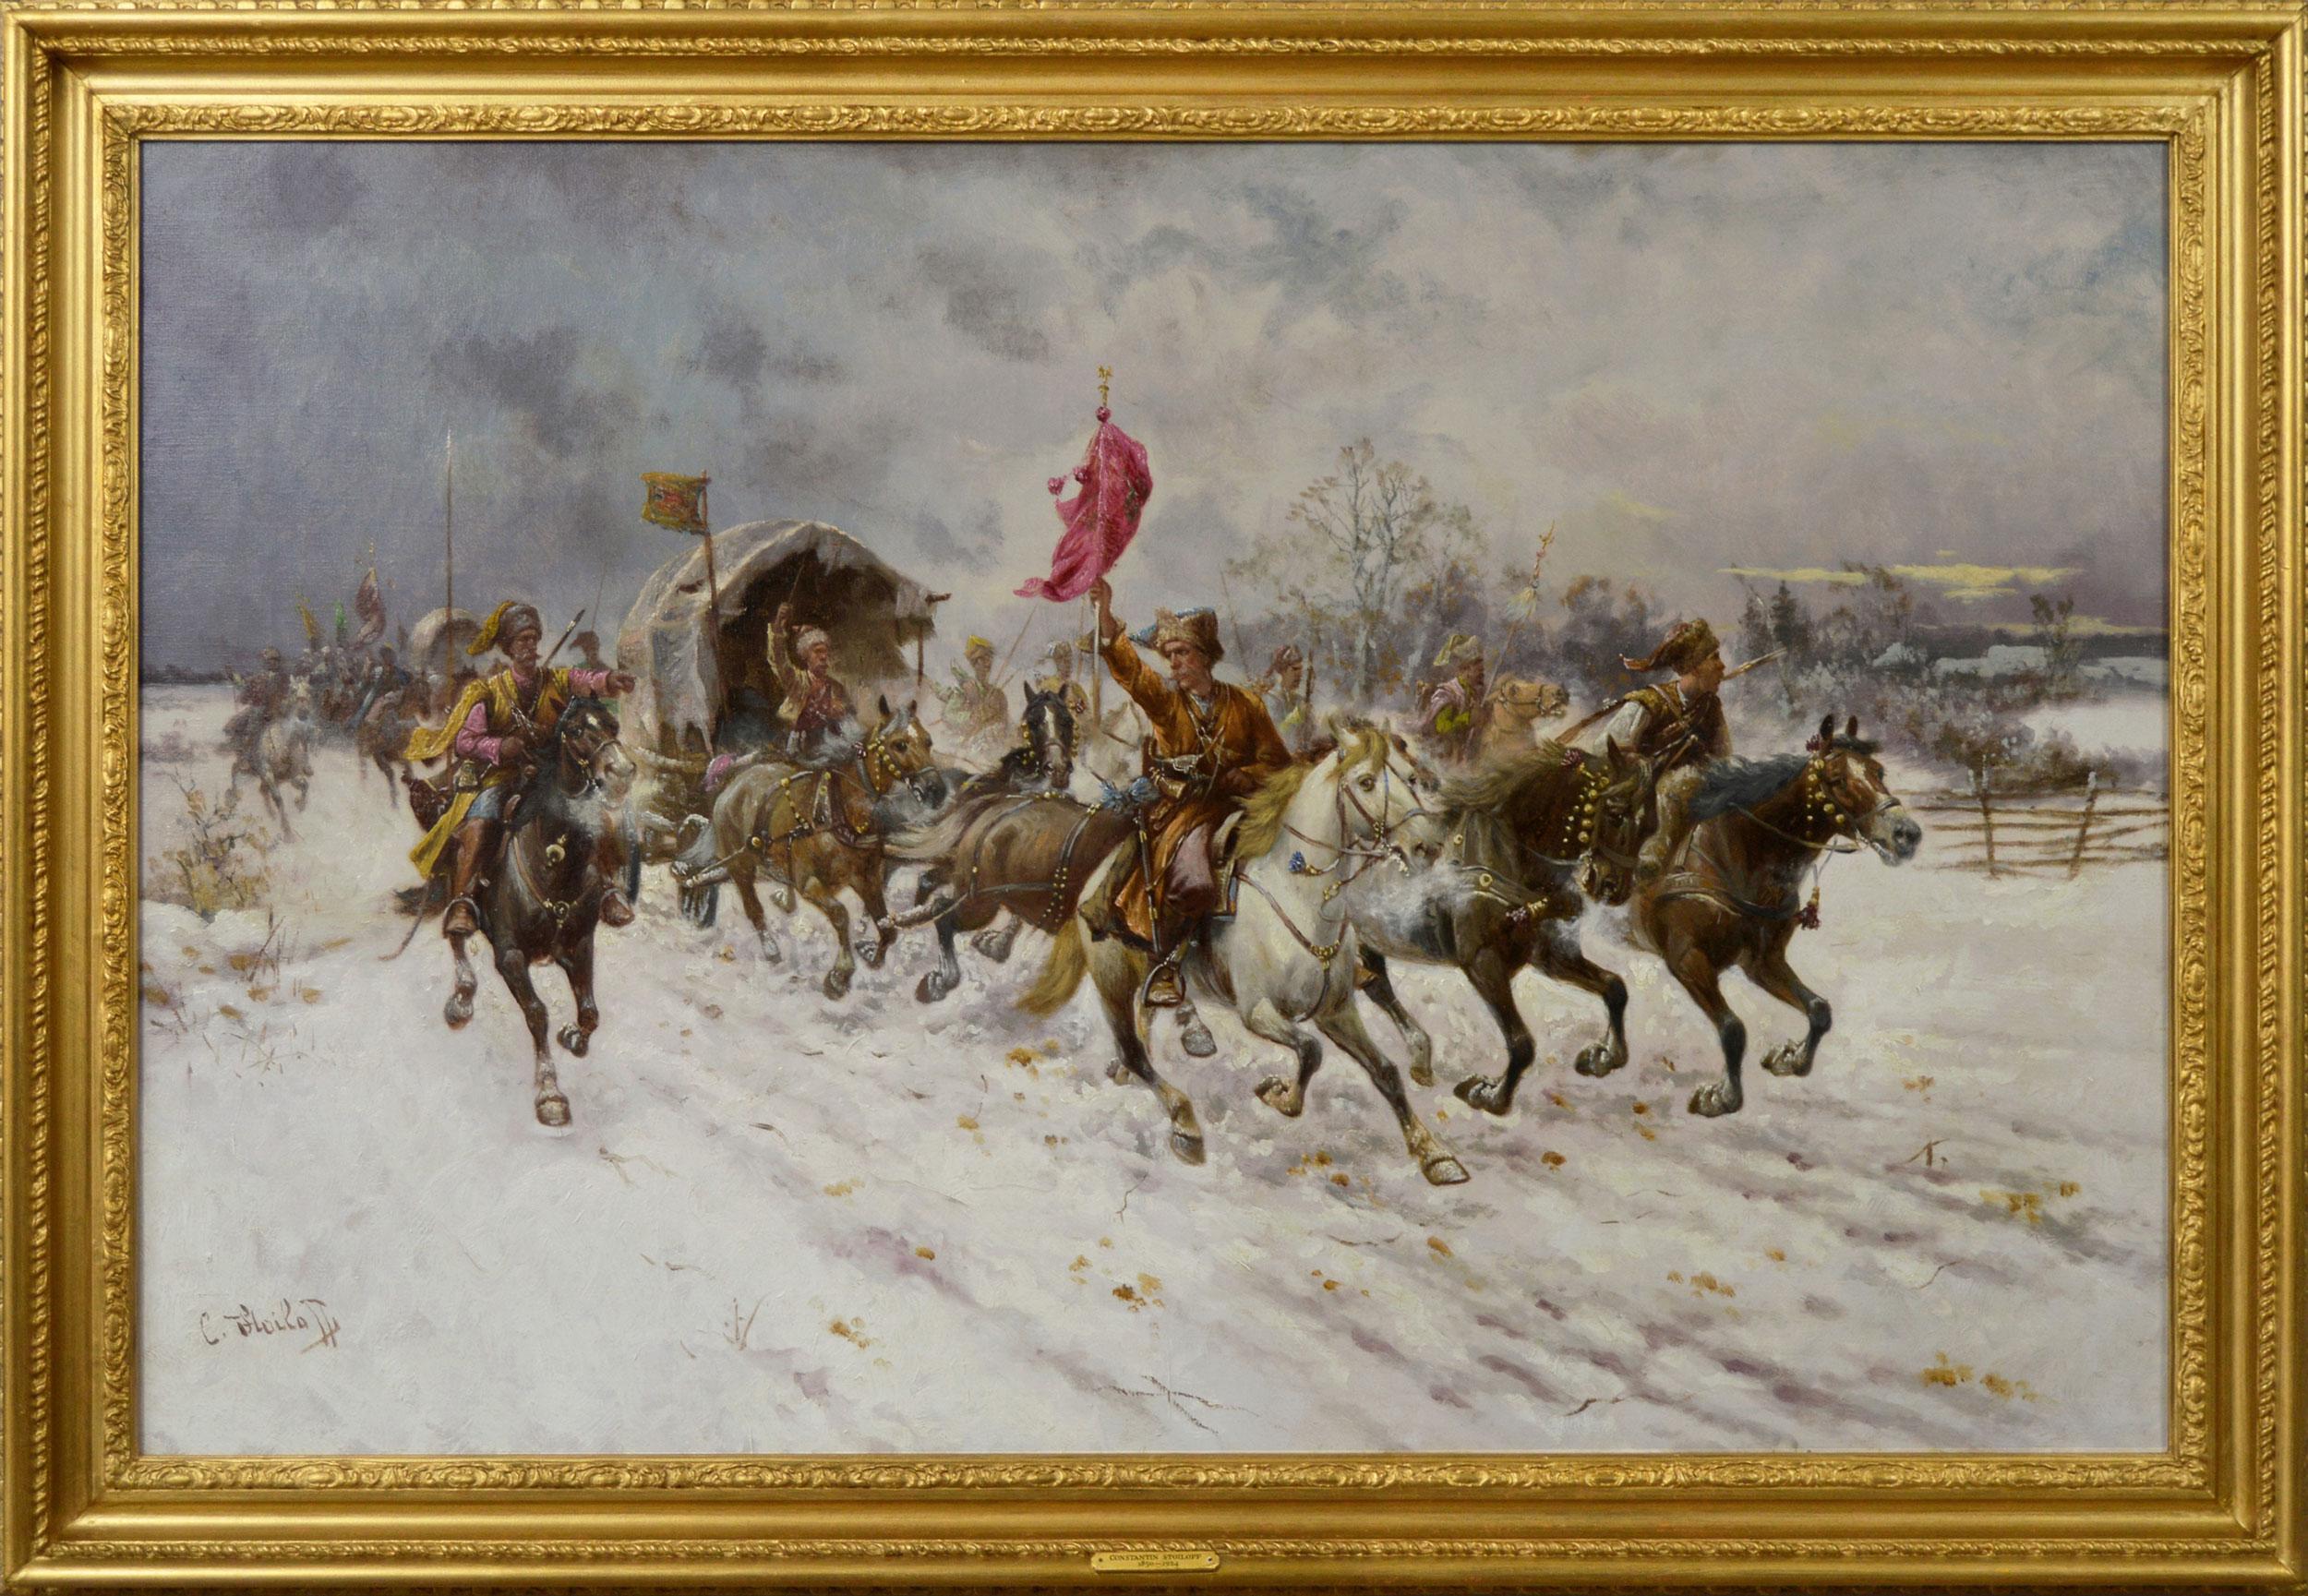 19th Century winter landscape oil painting of Cossacks on horseback 